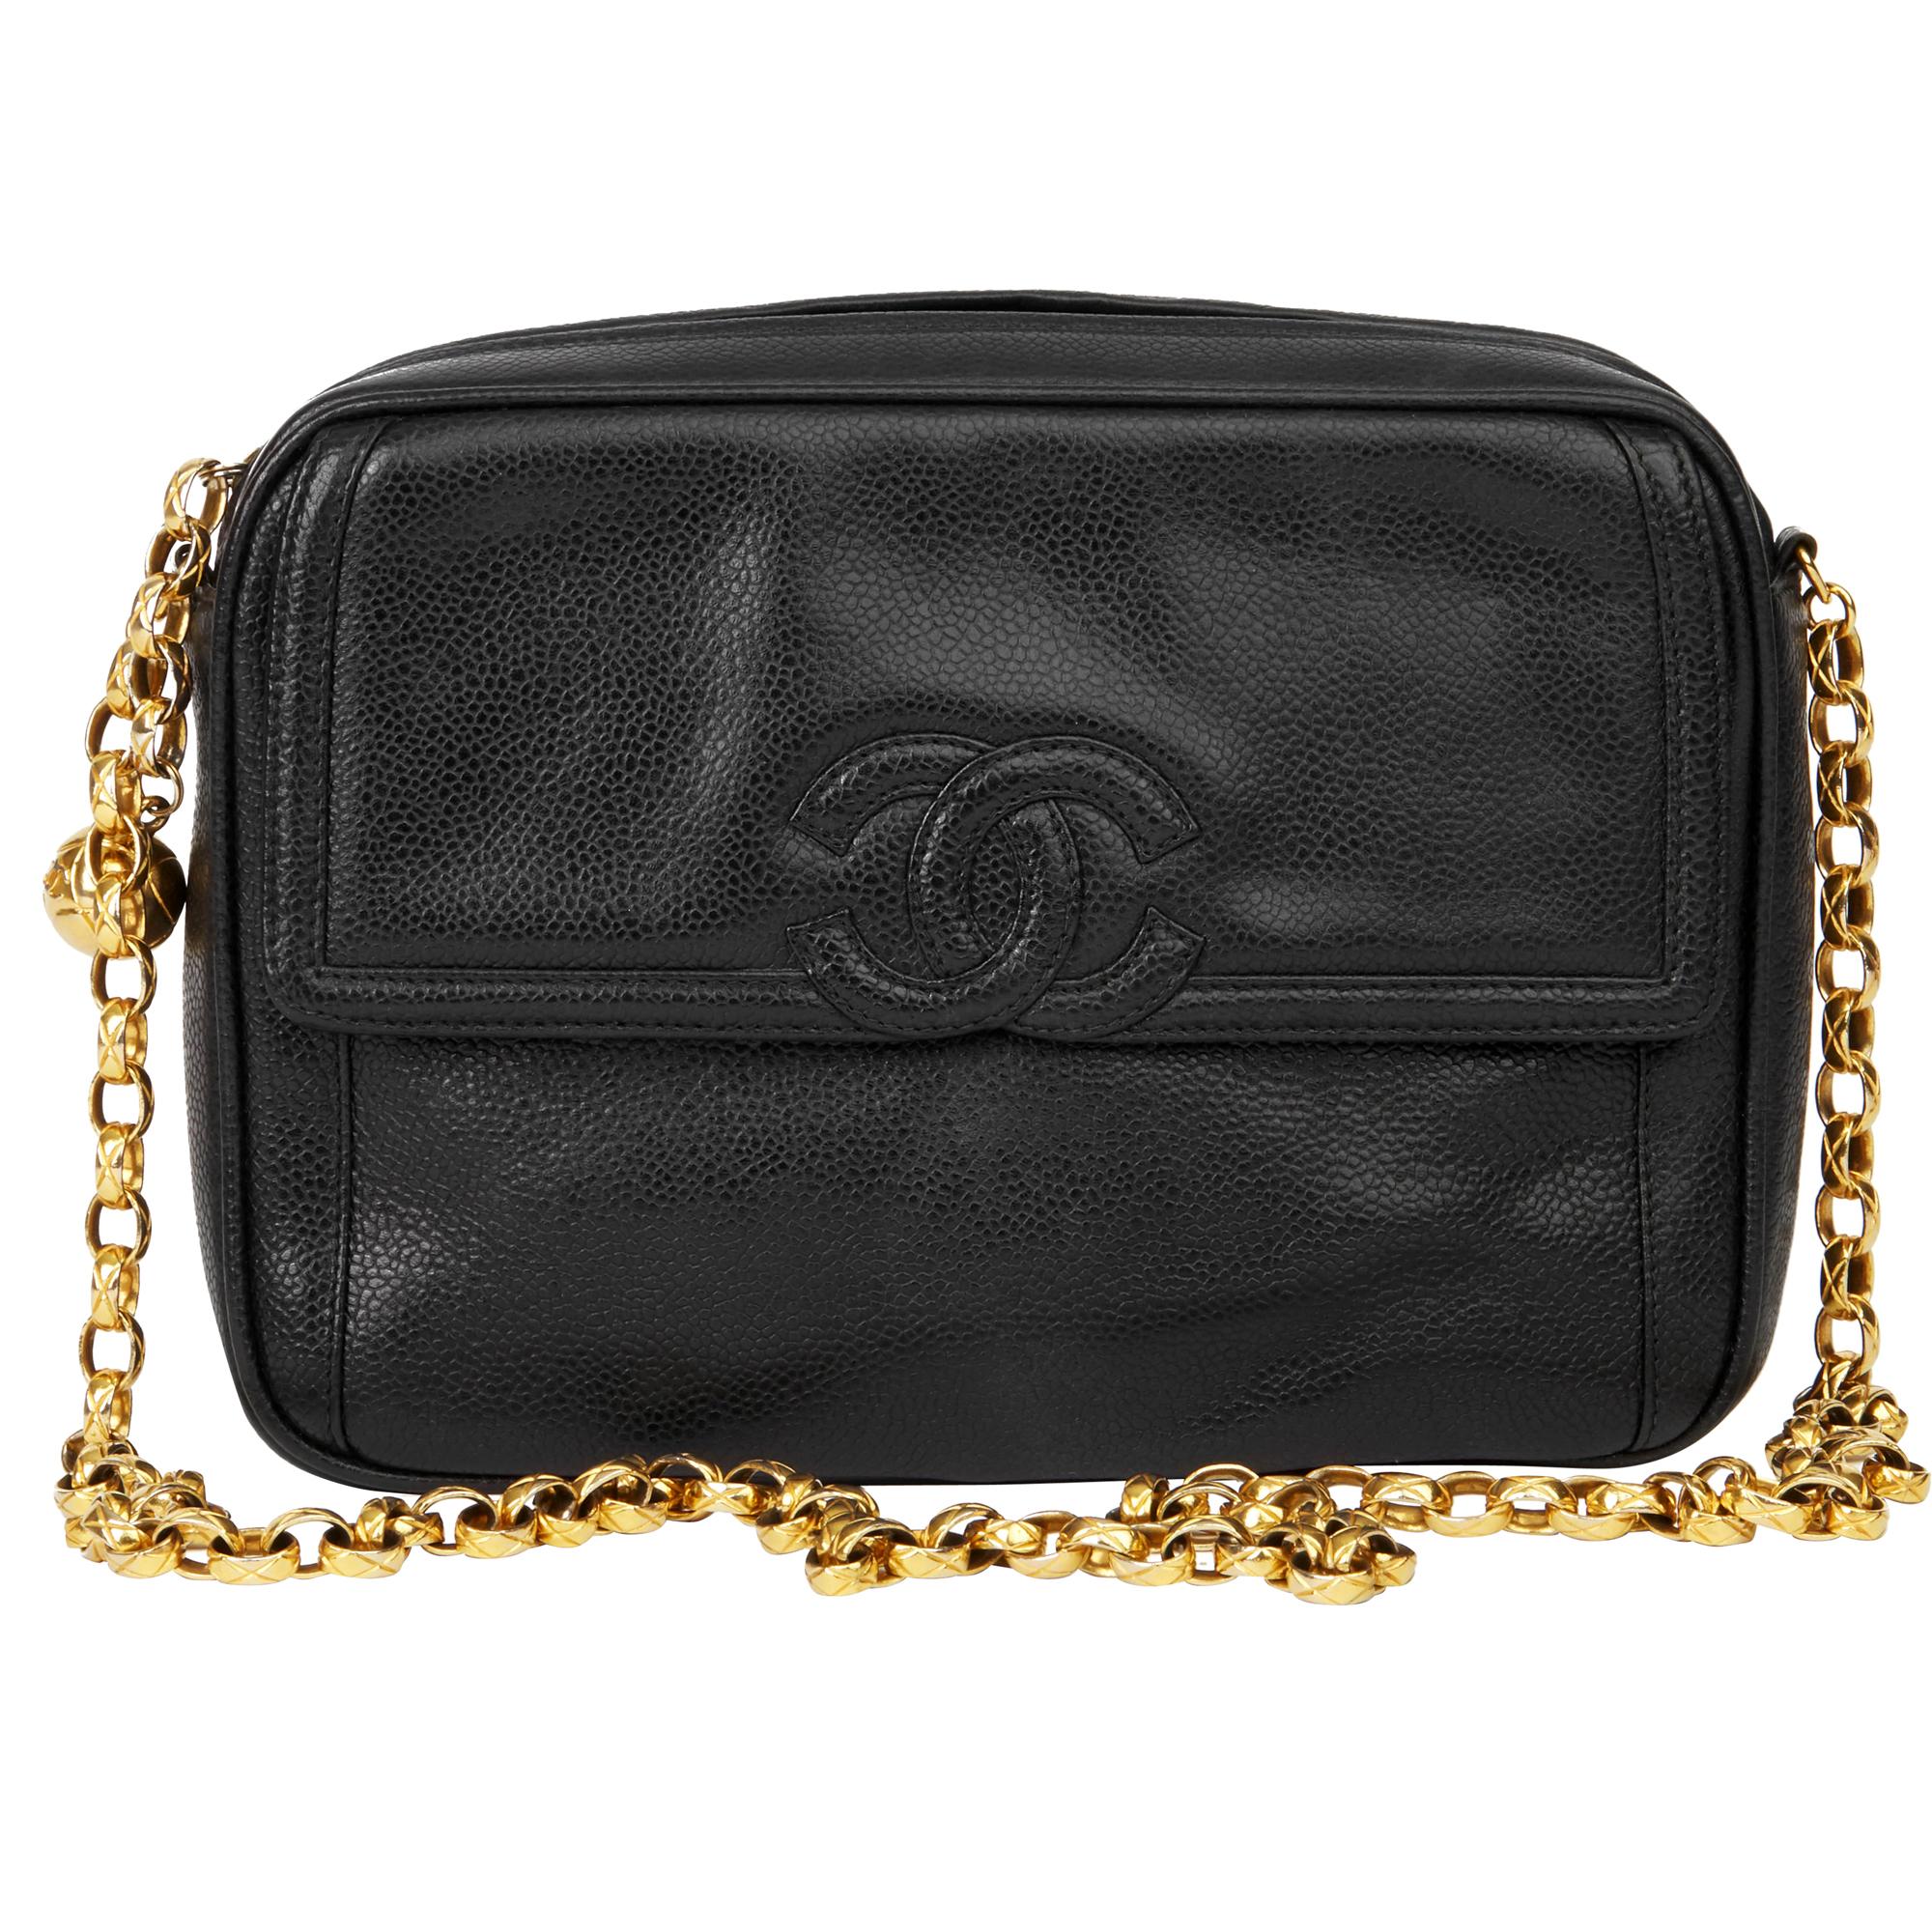 1992 Chanel Black Caviar Leather Vintage Camera Bag